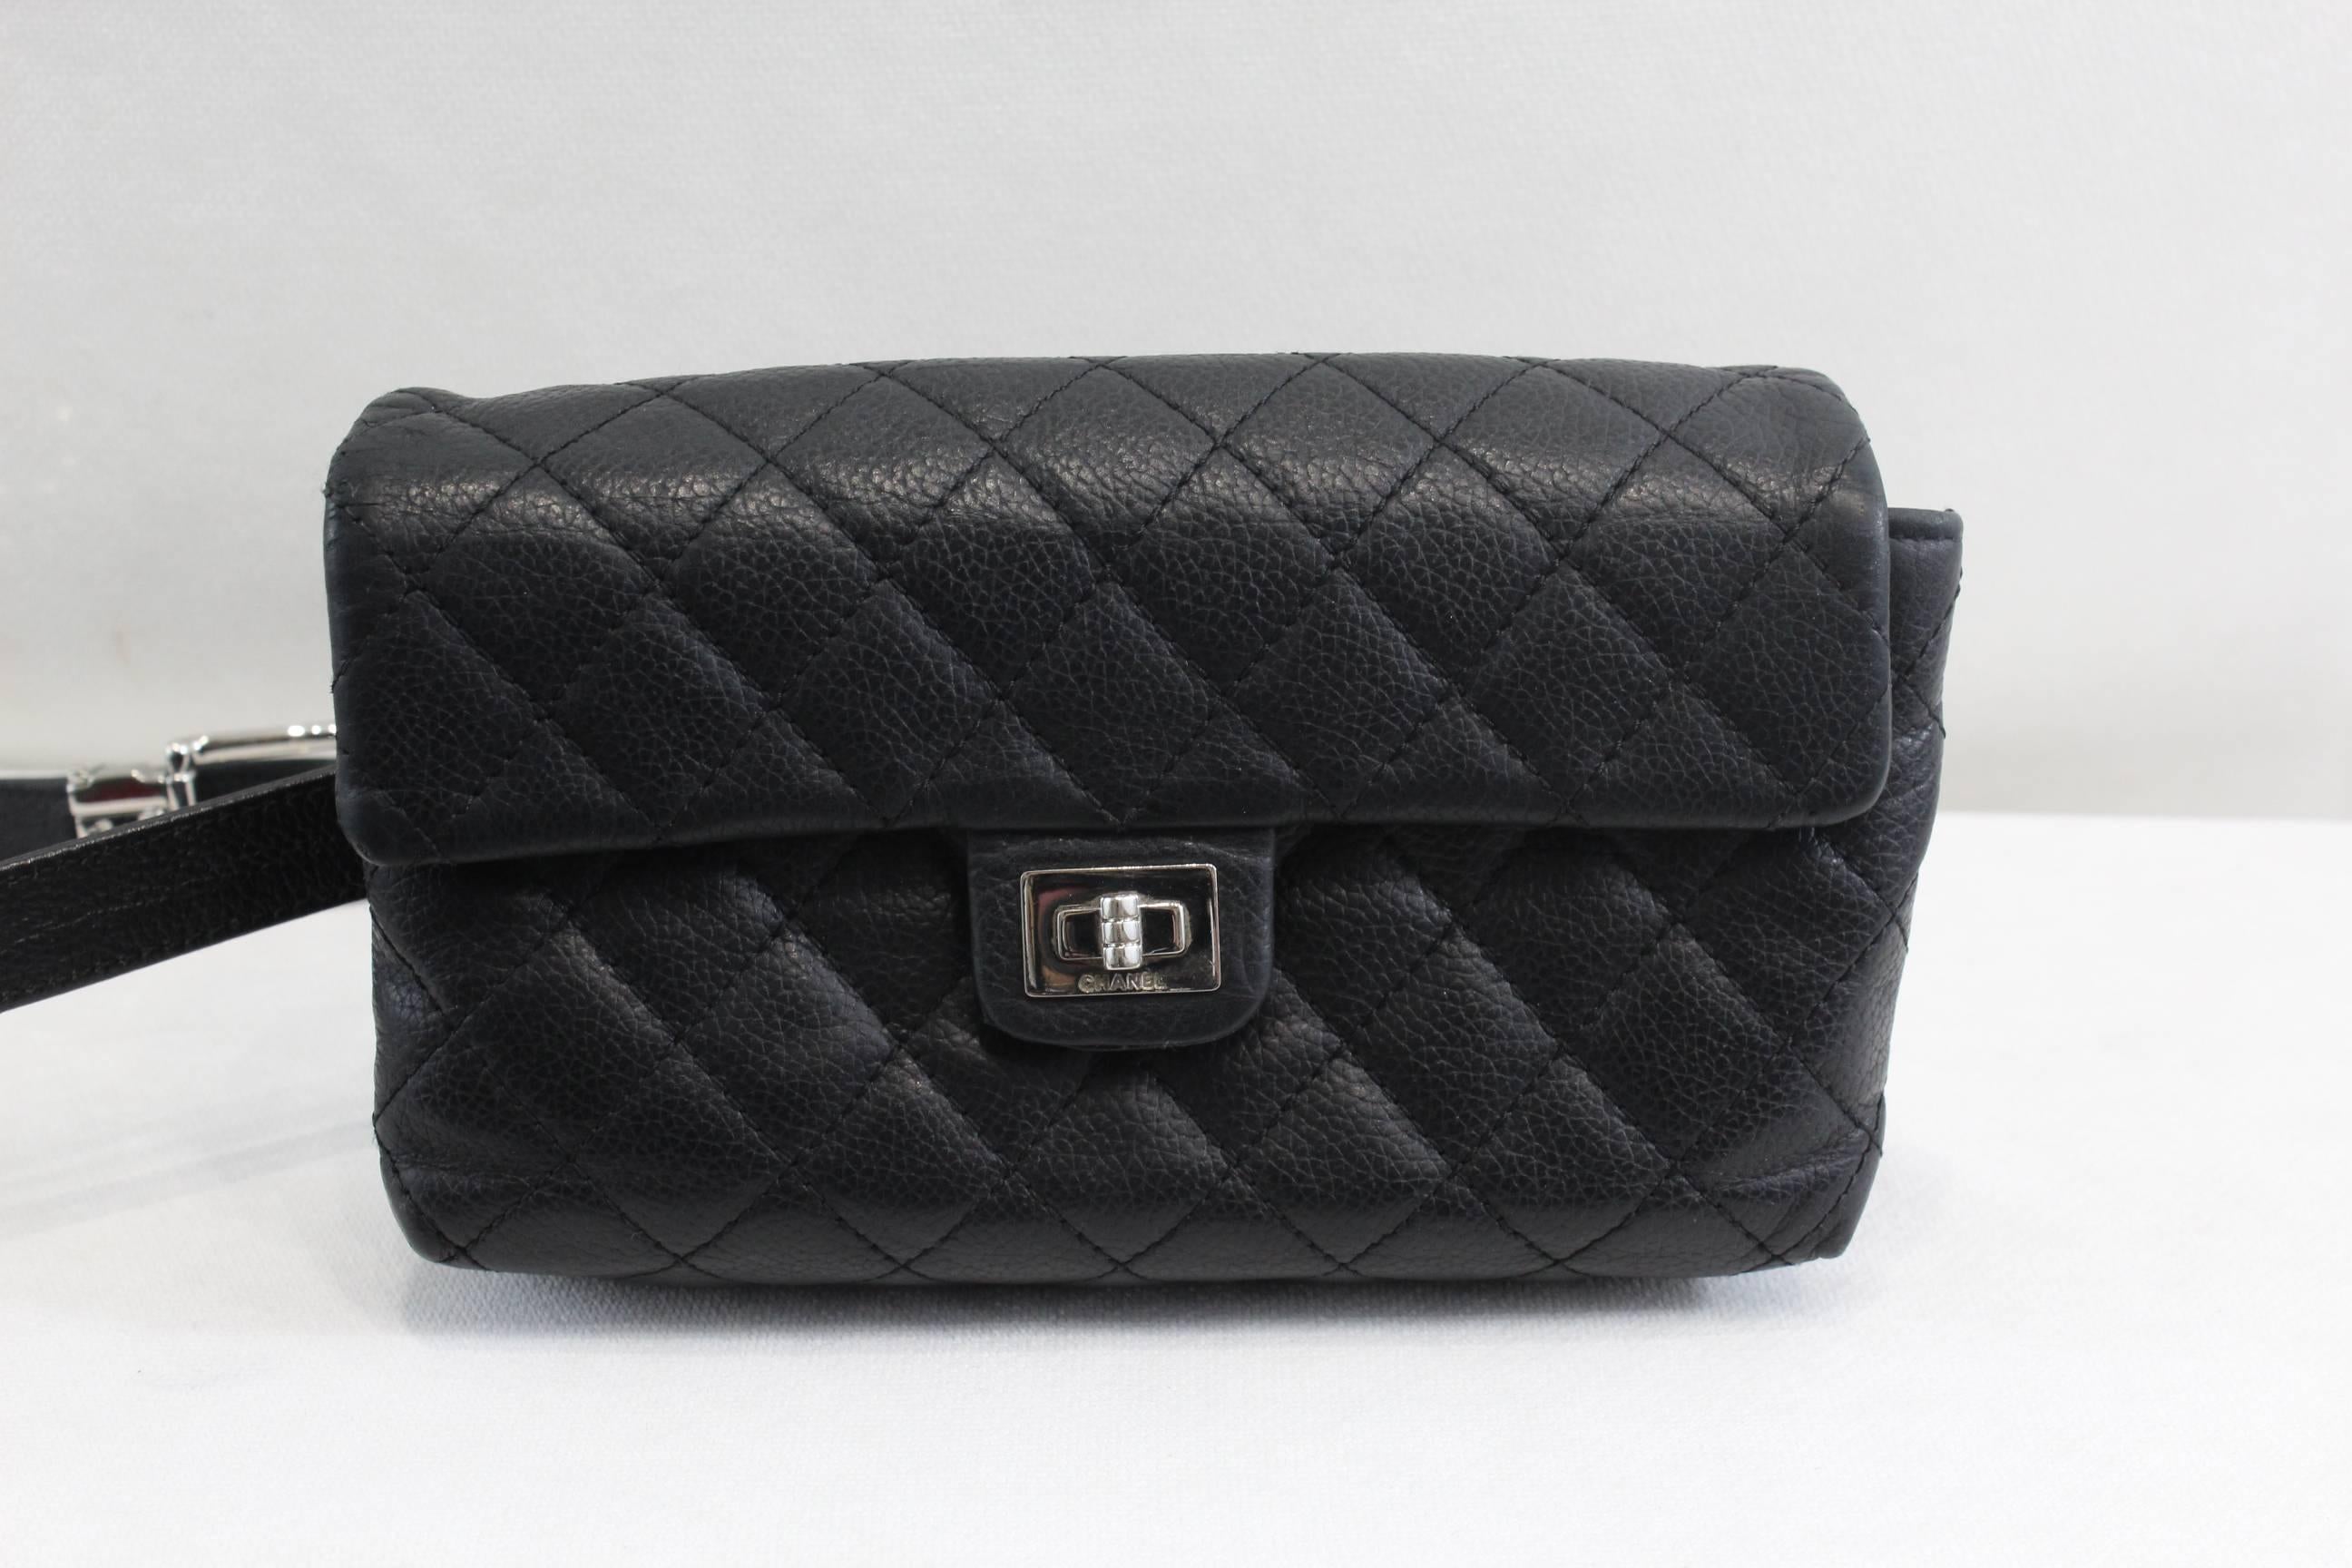 Chanel Uniform Belt Bag in Black Caviar Leather 1